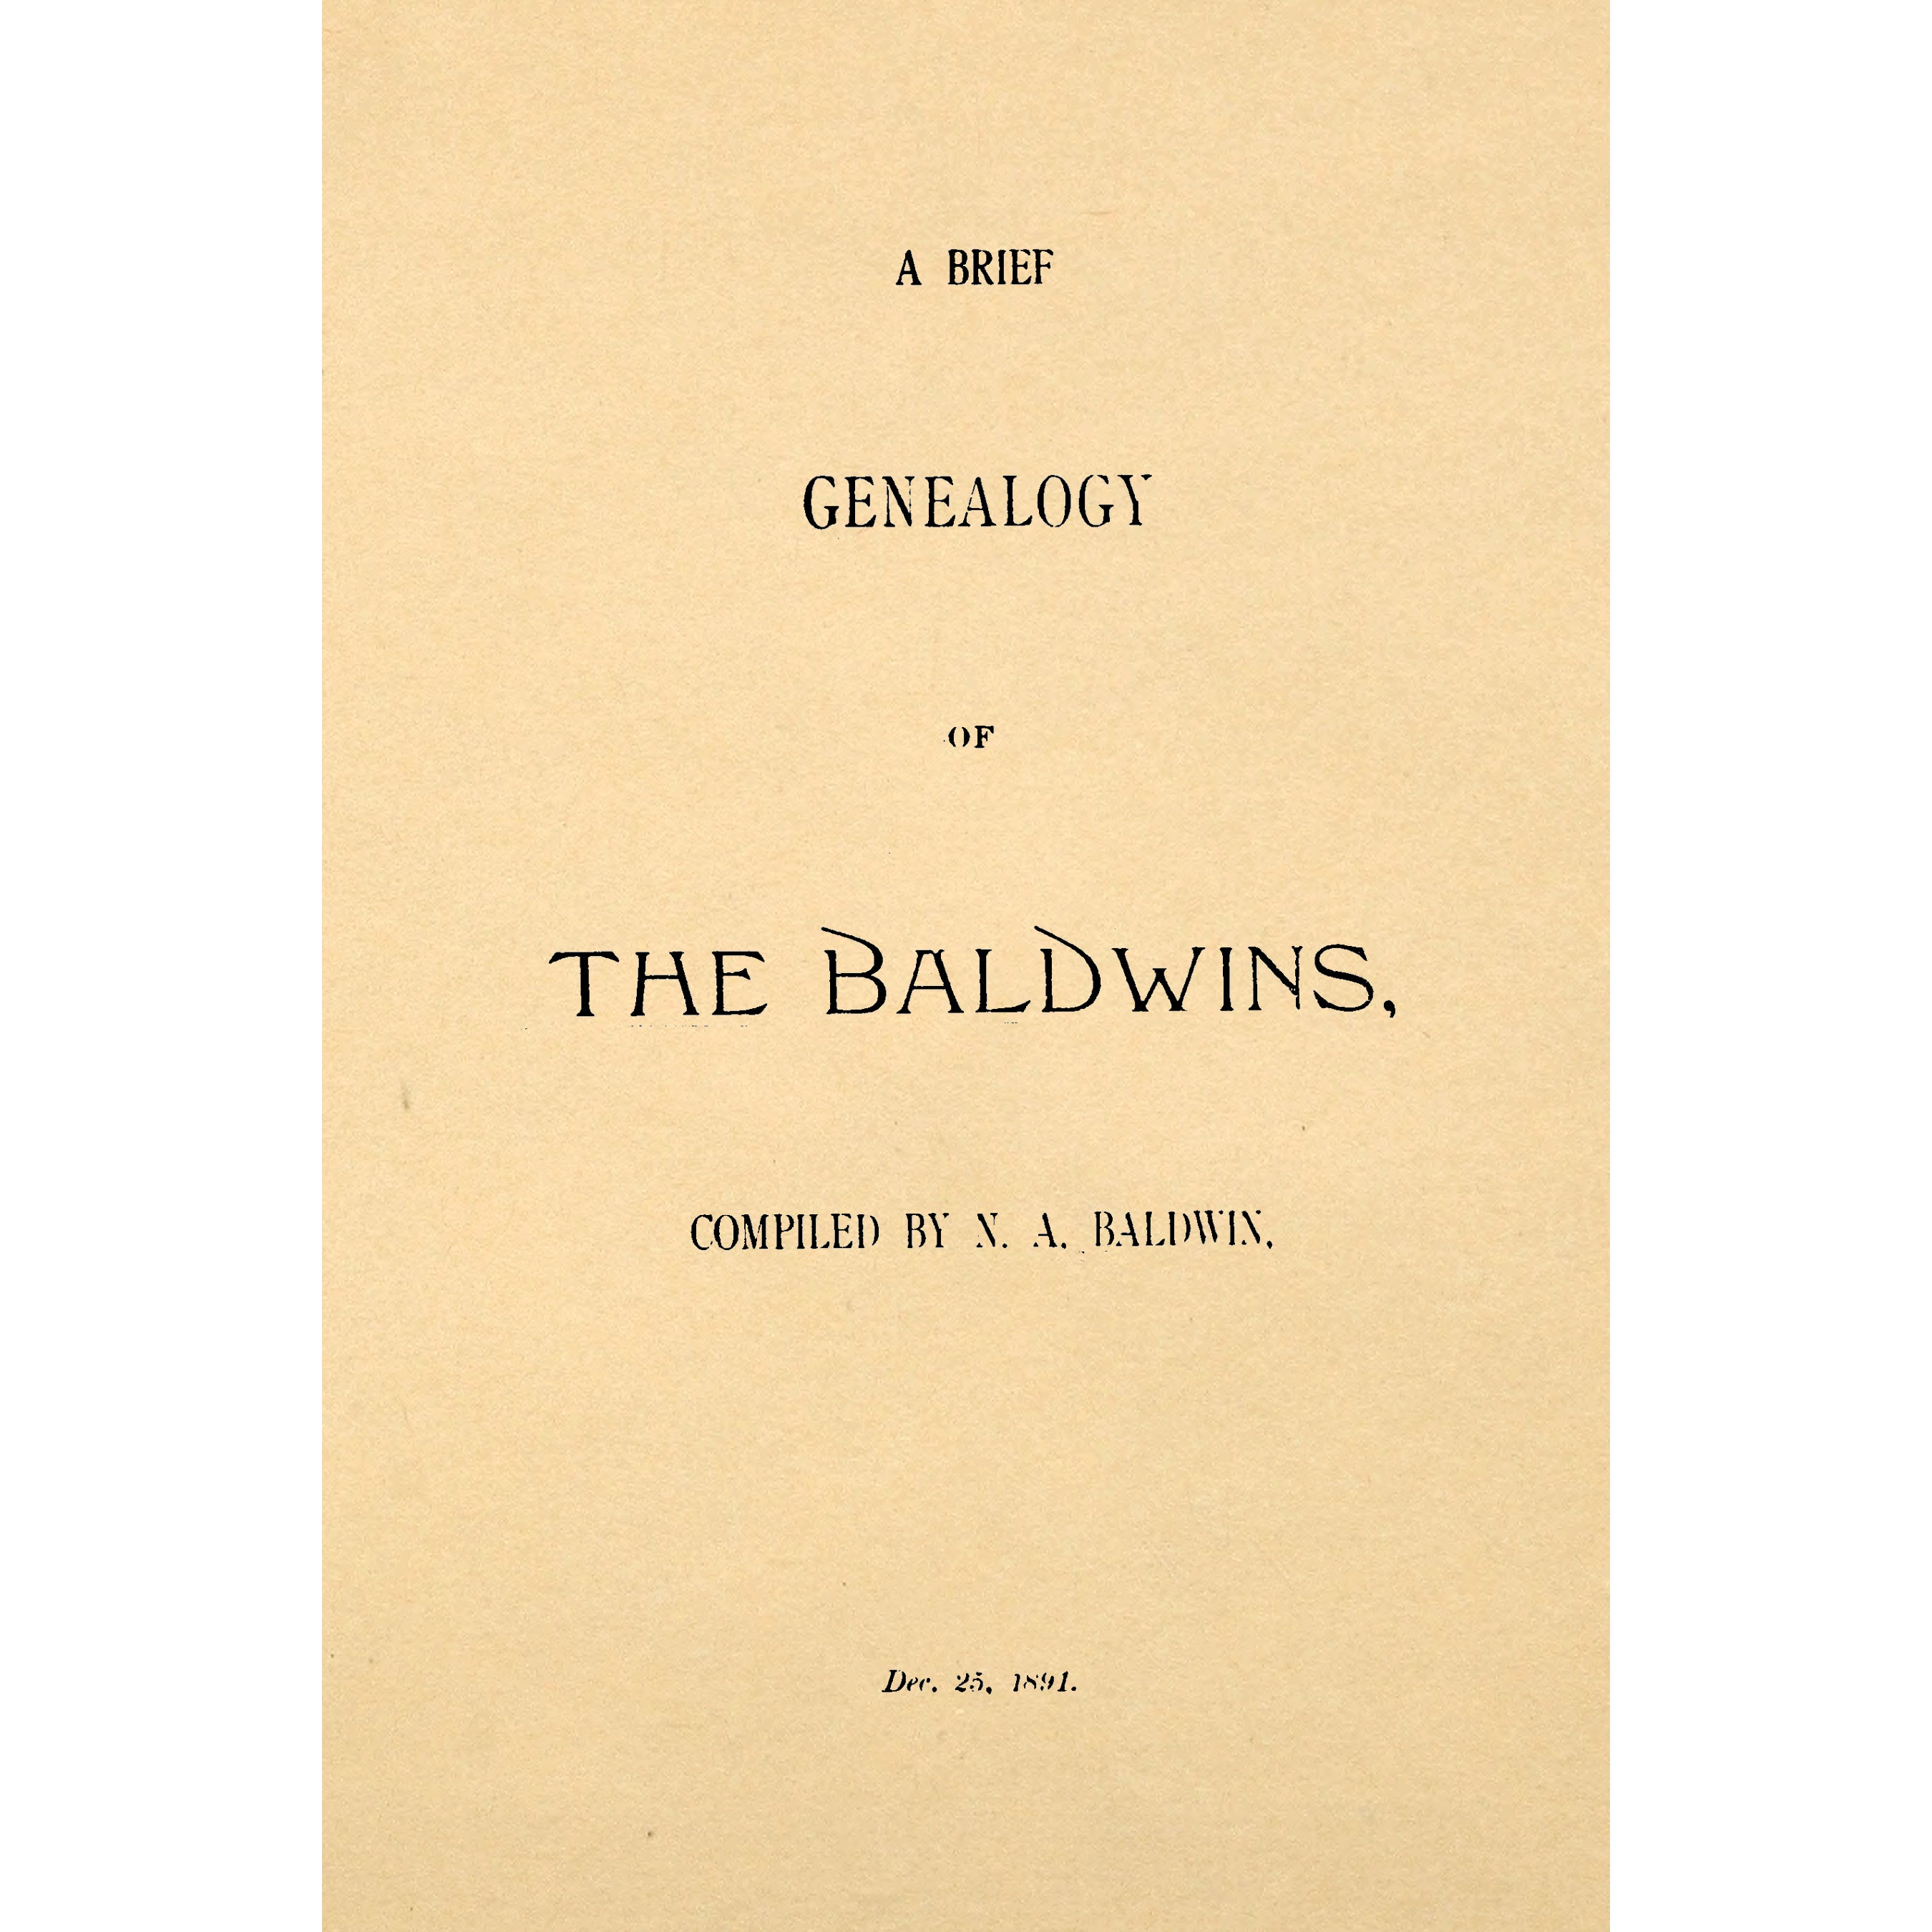 A brief genealogy of the Baldwins